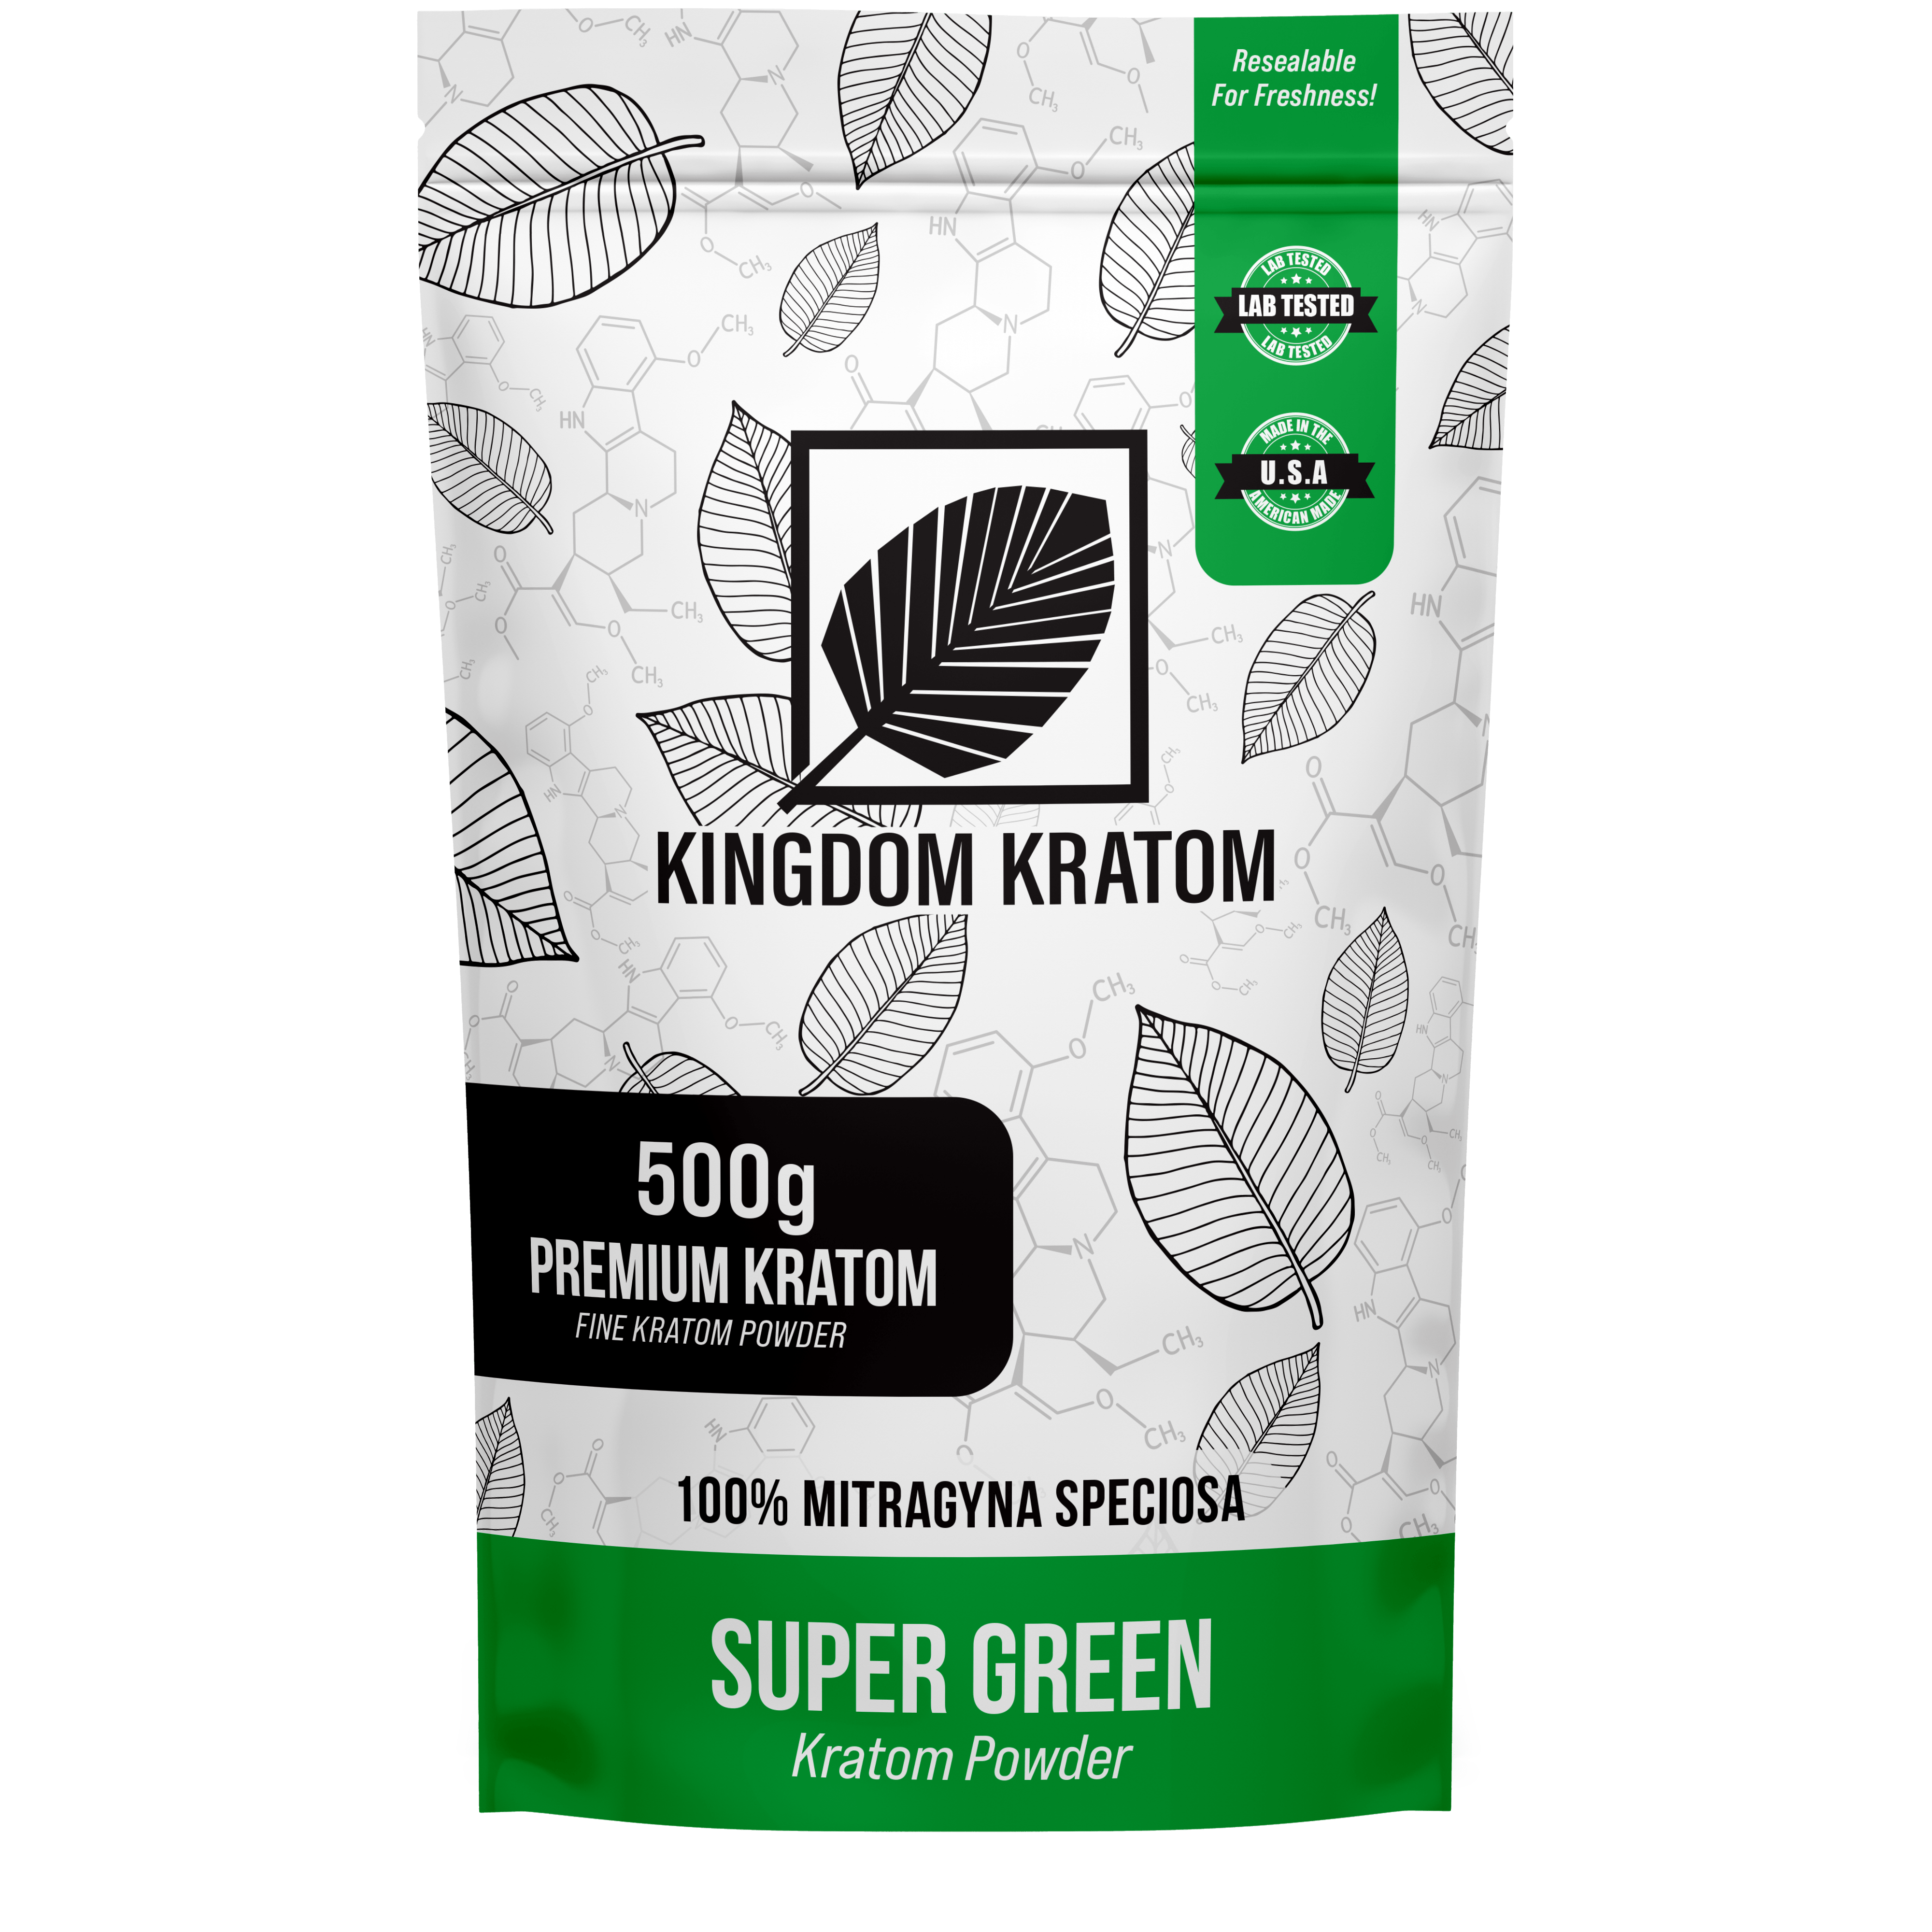 Super Green Borneo Kratom Powder 500g